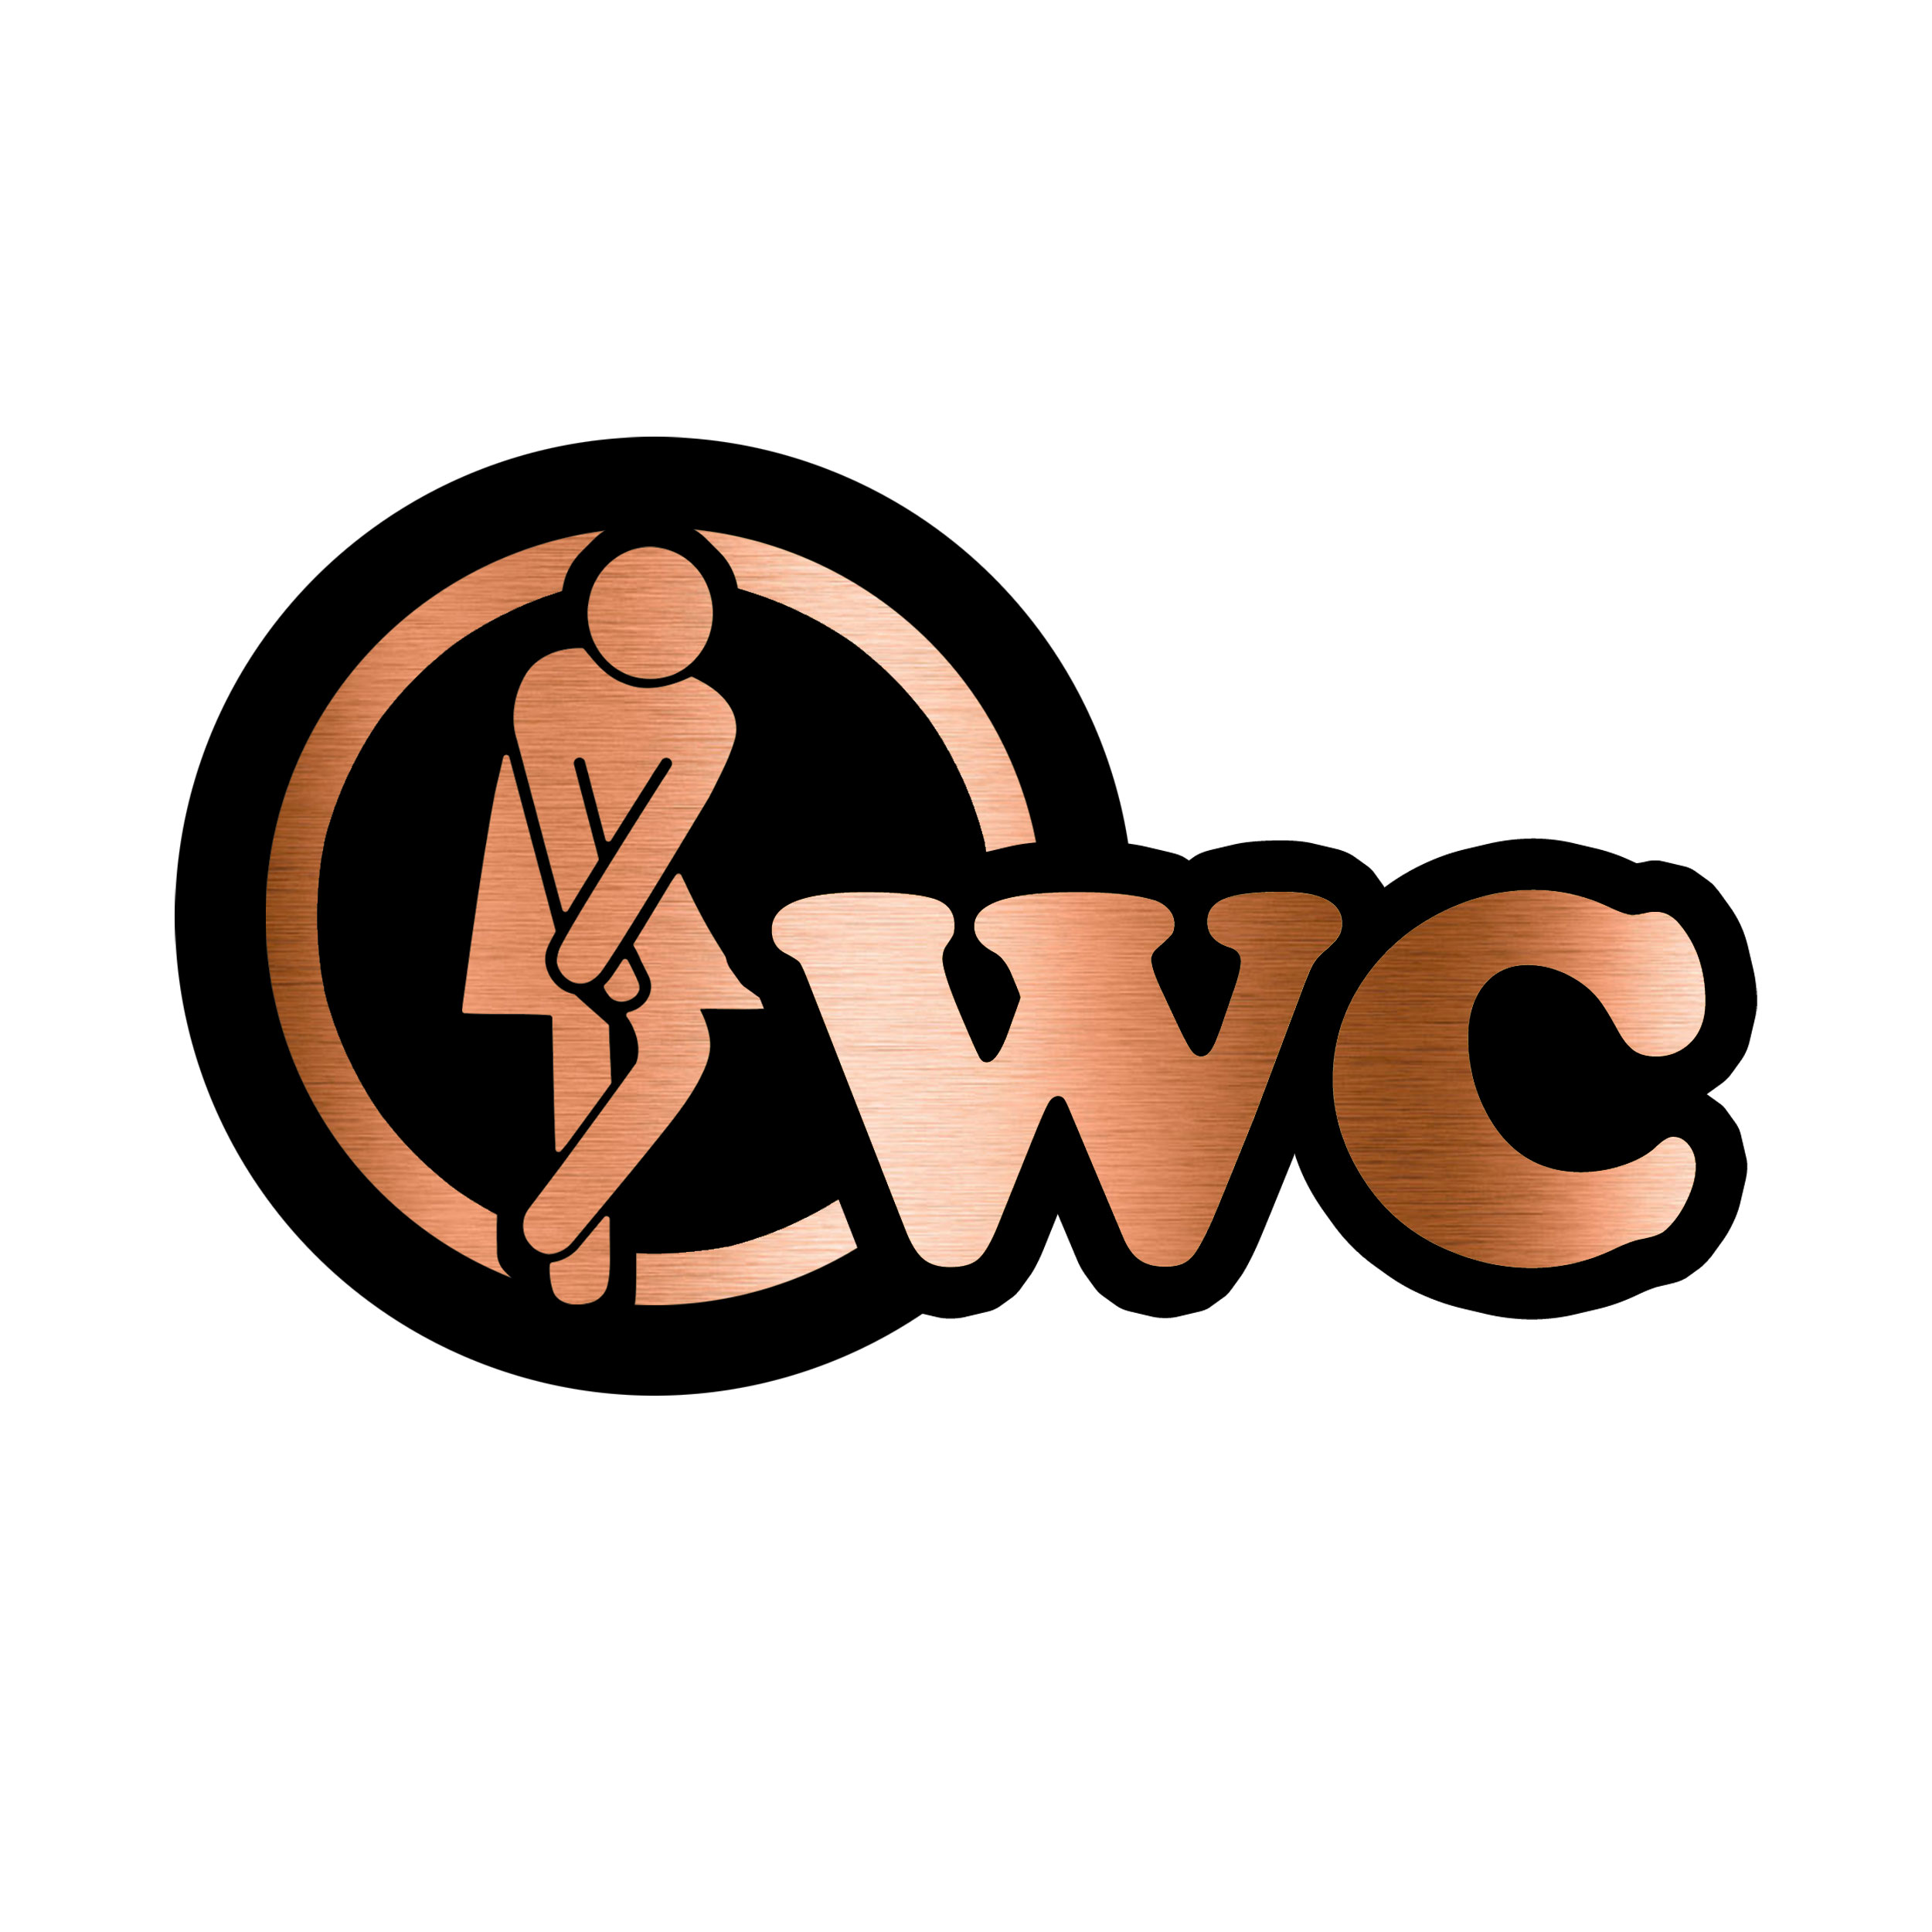 تابلو نشانگر آژنگ طرح wc کد w.w03